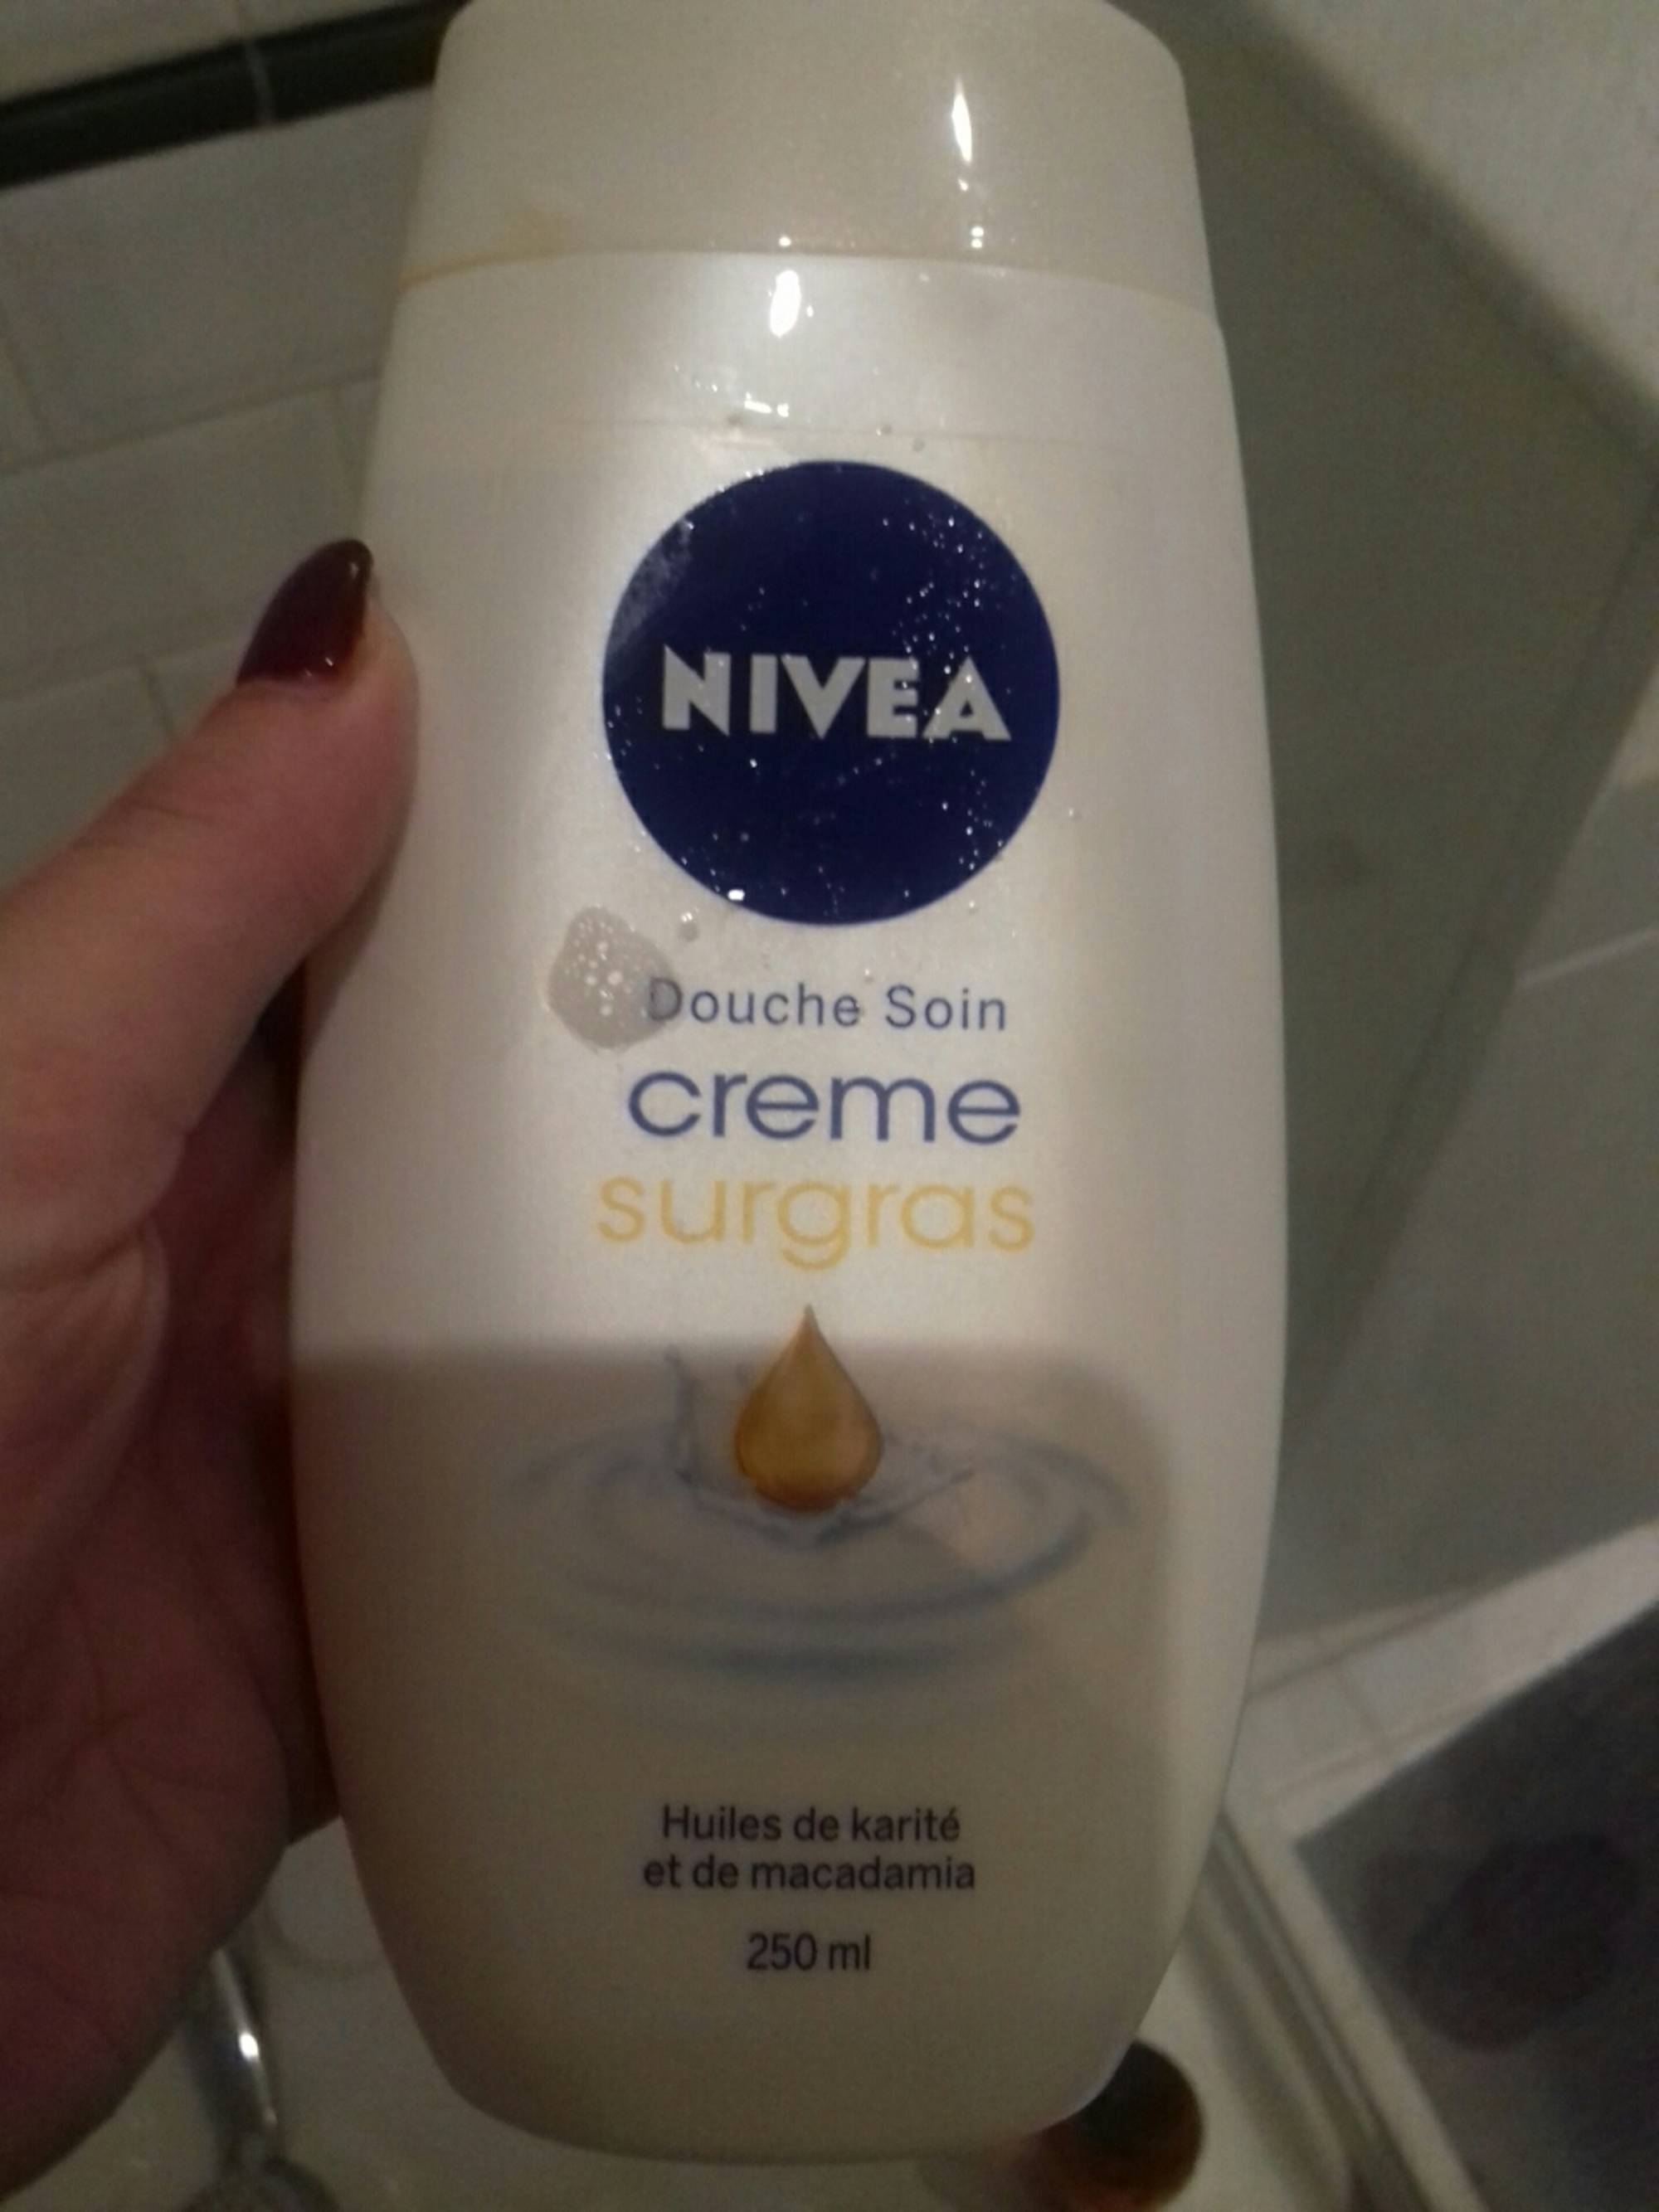 NIVEA - Crème surgras - Douche Soin